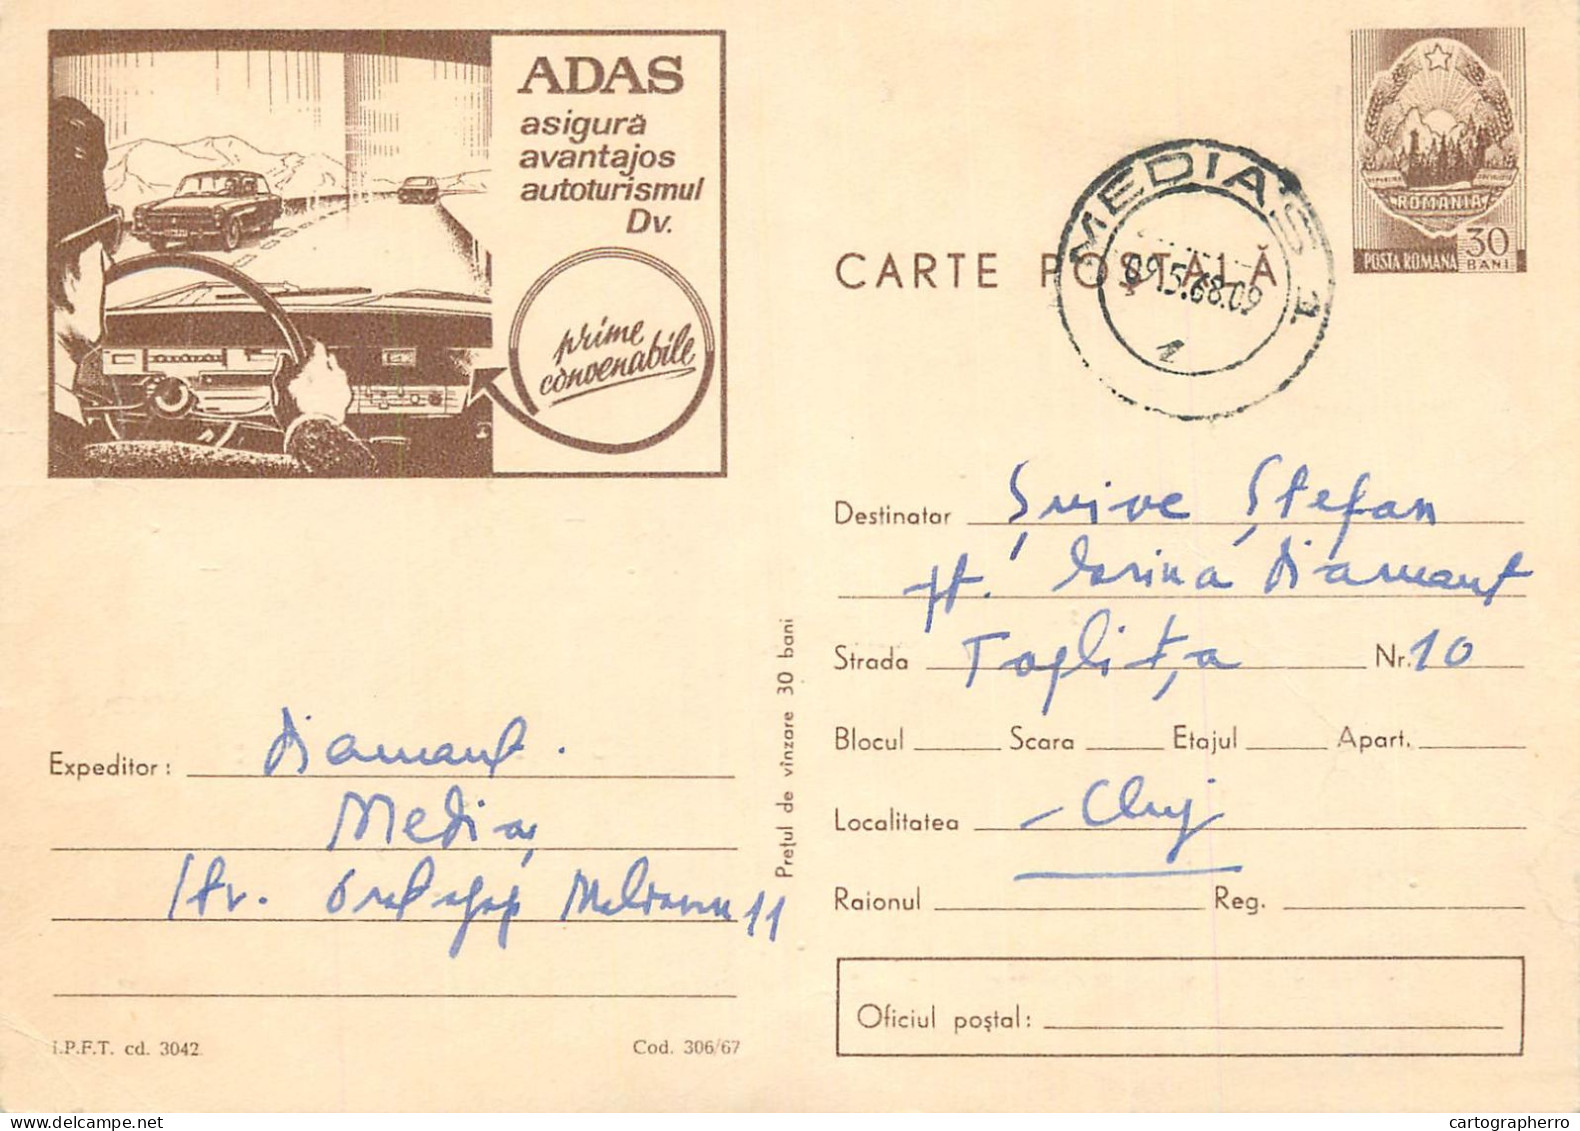 Postal Stationery Postcard Romania ADAS Prime Asigurare - Romania